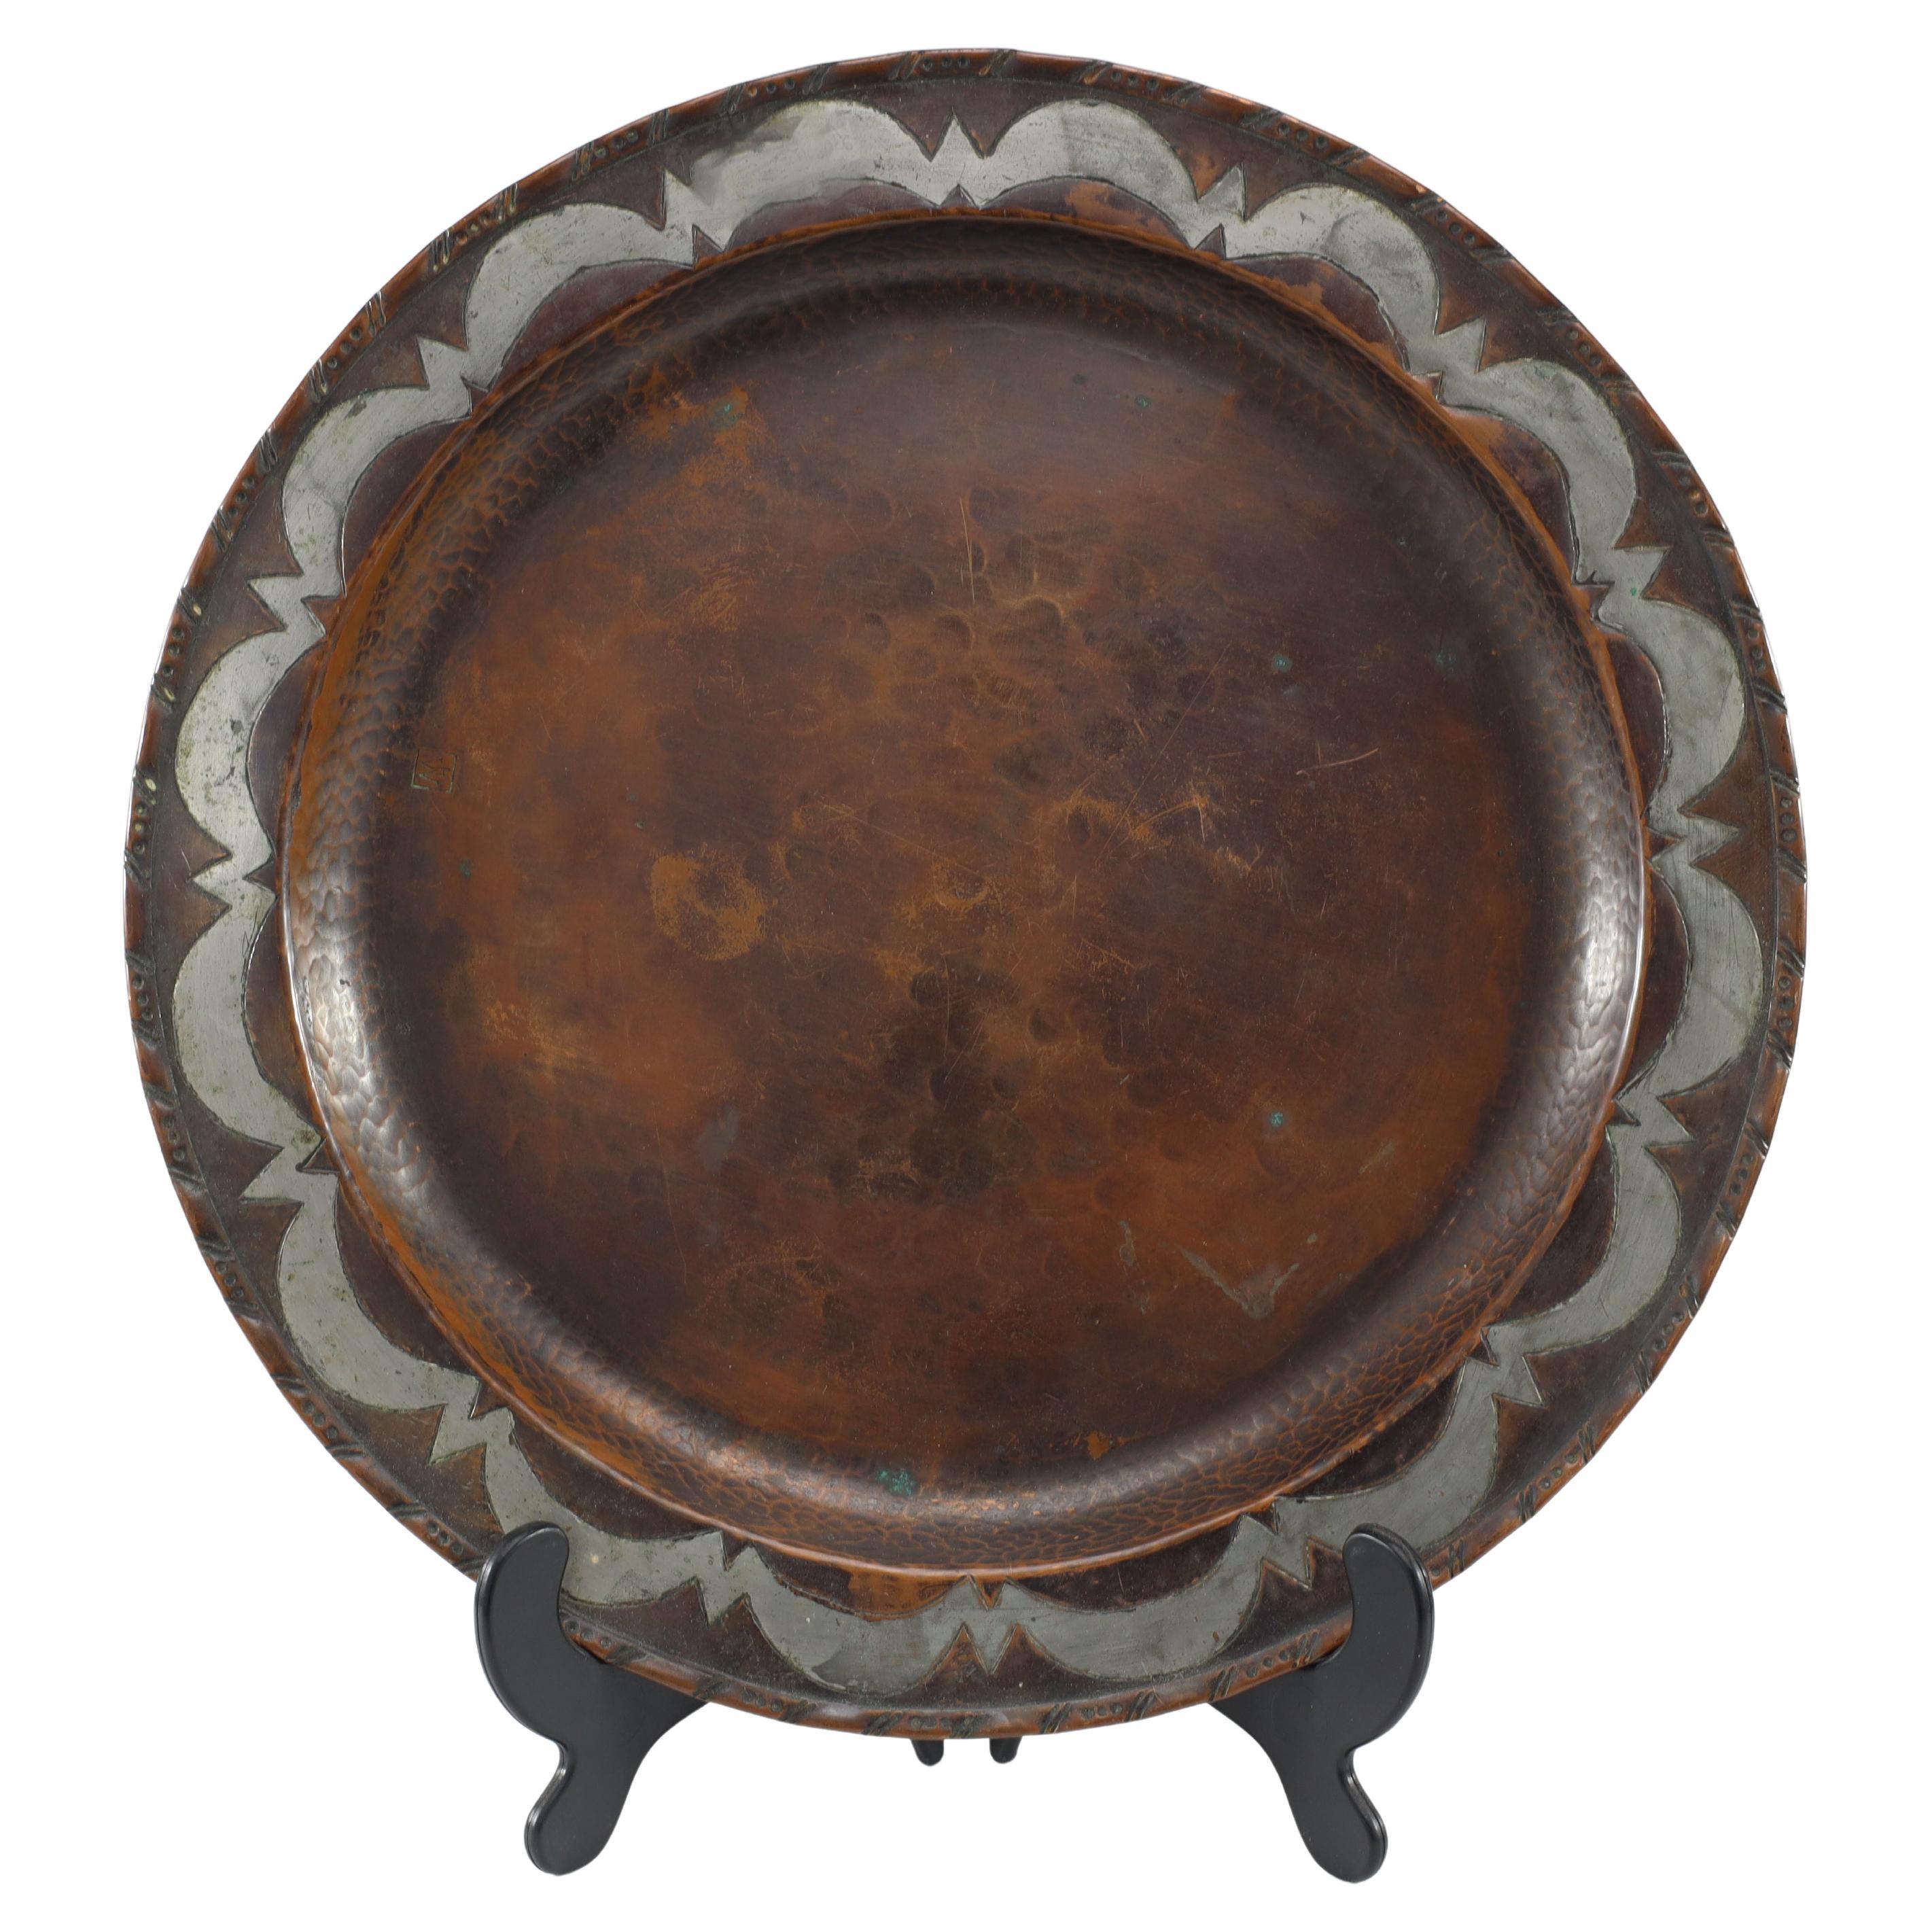 Hugh Wallis. An Arts & Crafts hand formed round copper plate